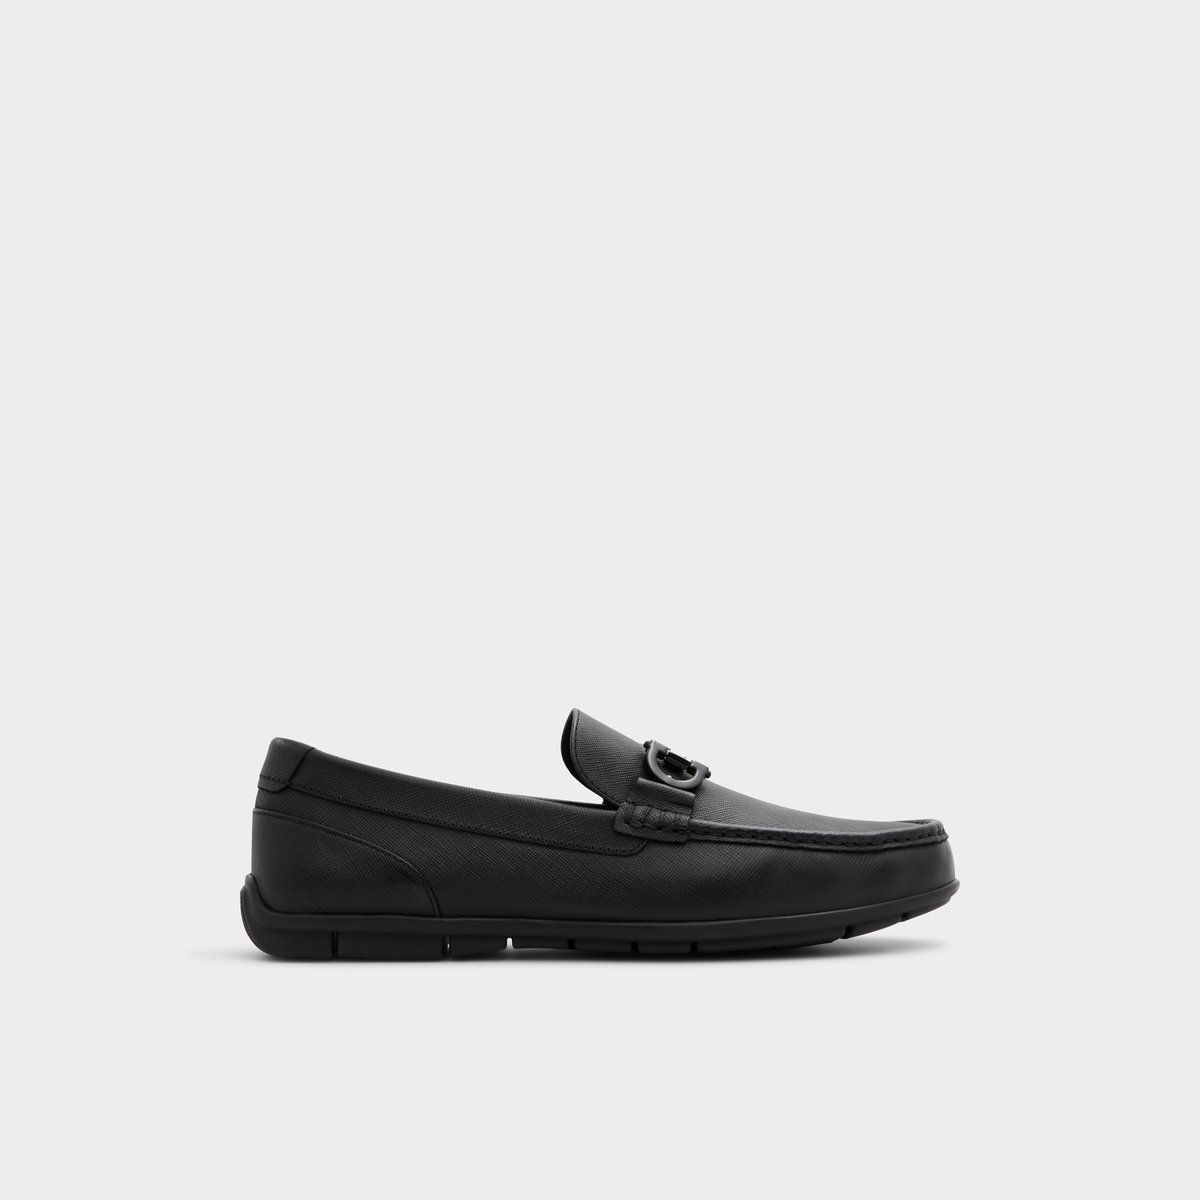 Orlovoflex Black Leather Embossed Men's Casual Shoes | ALDO Canada